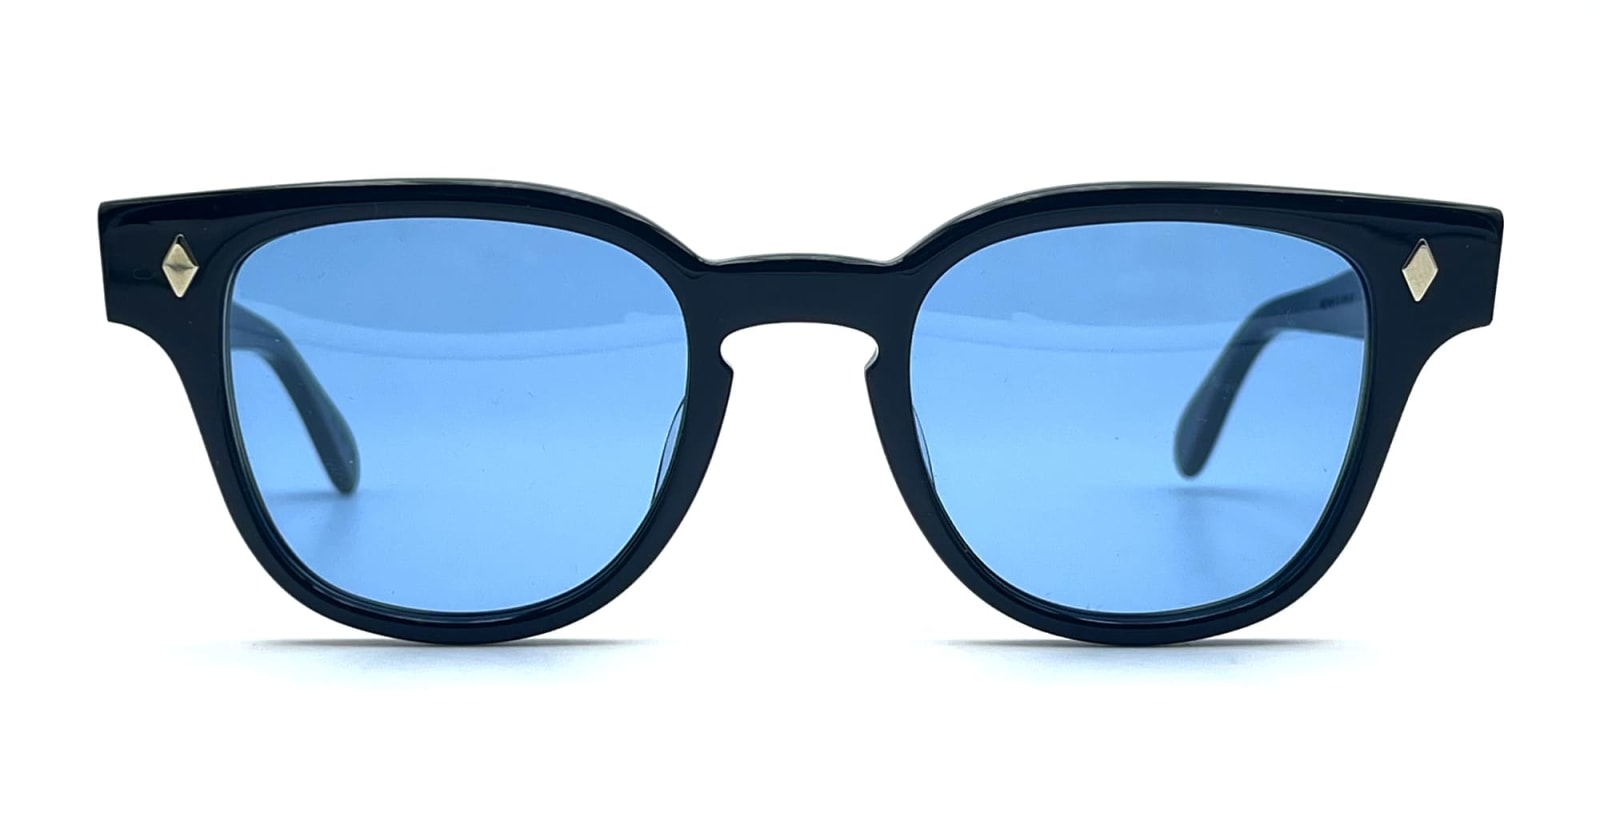 Julius Tart Optical Bryan 48x23 - Black / Blue Lens Sunglasses